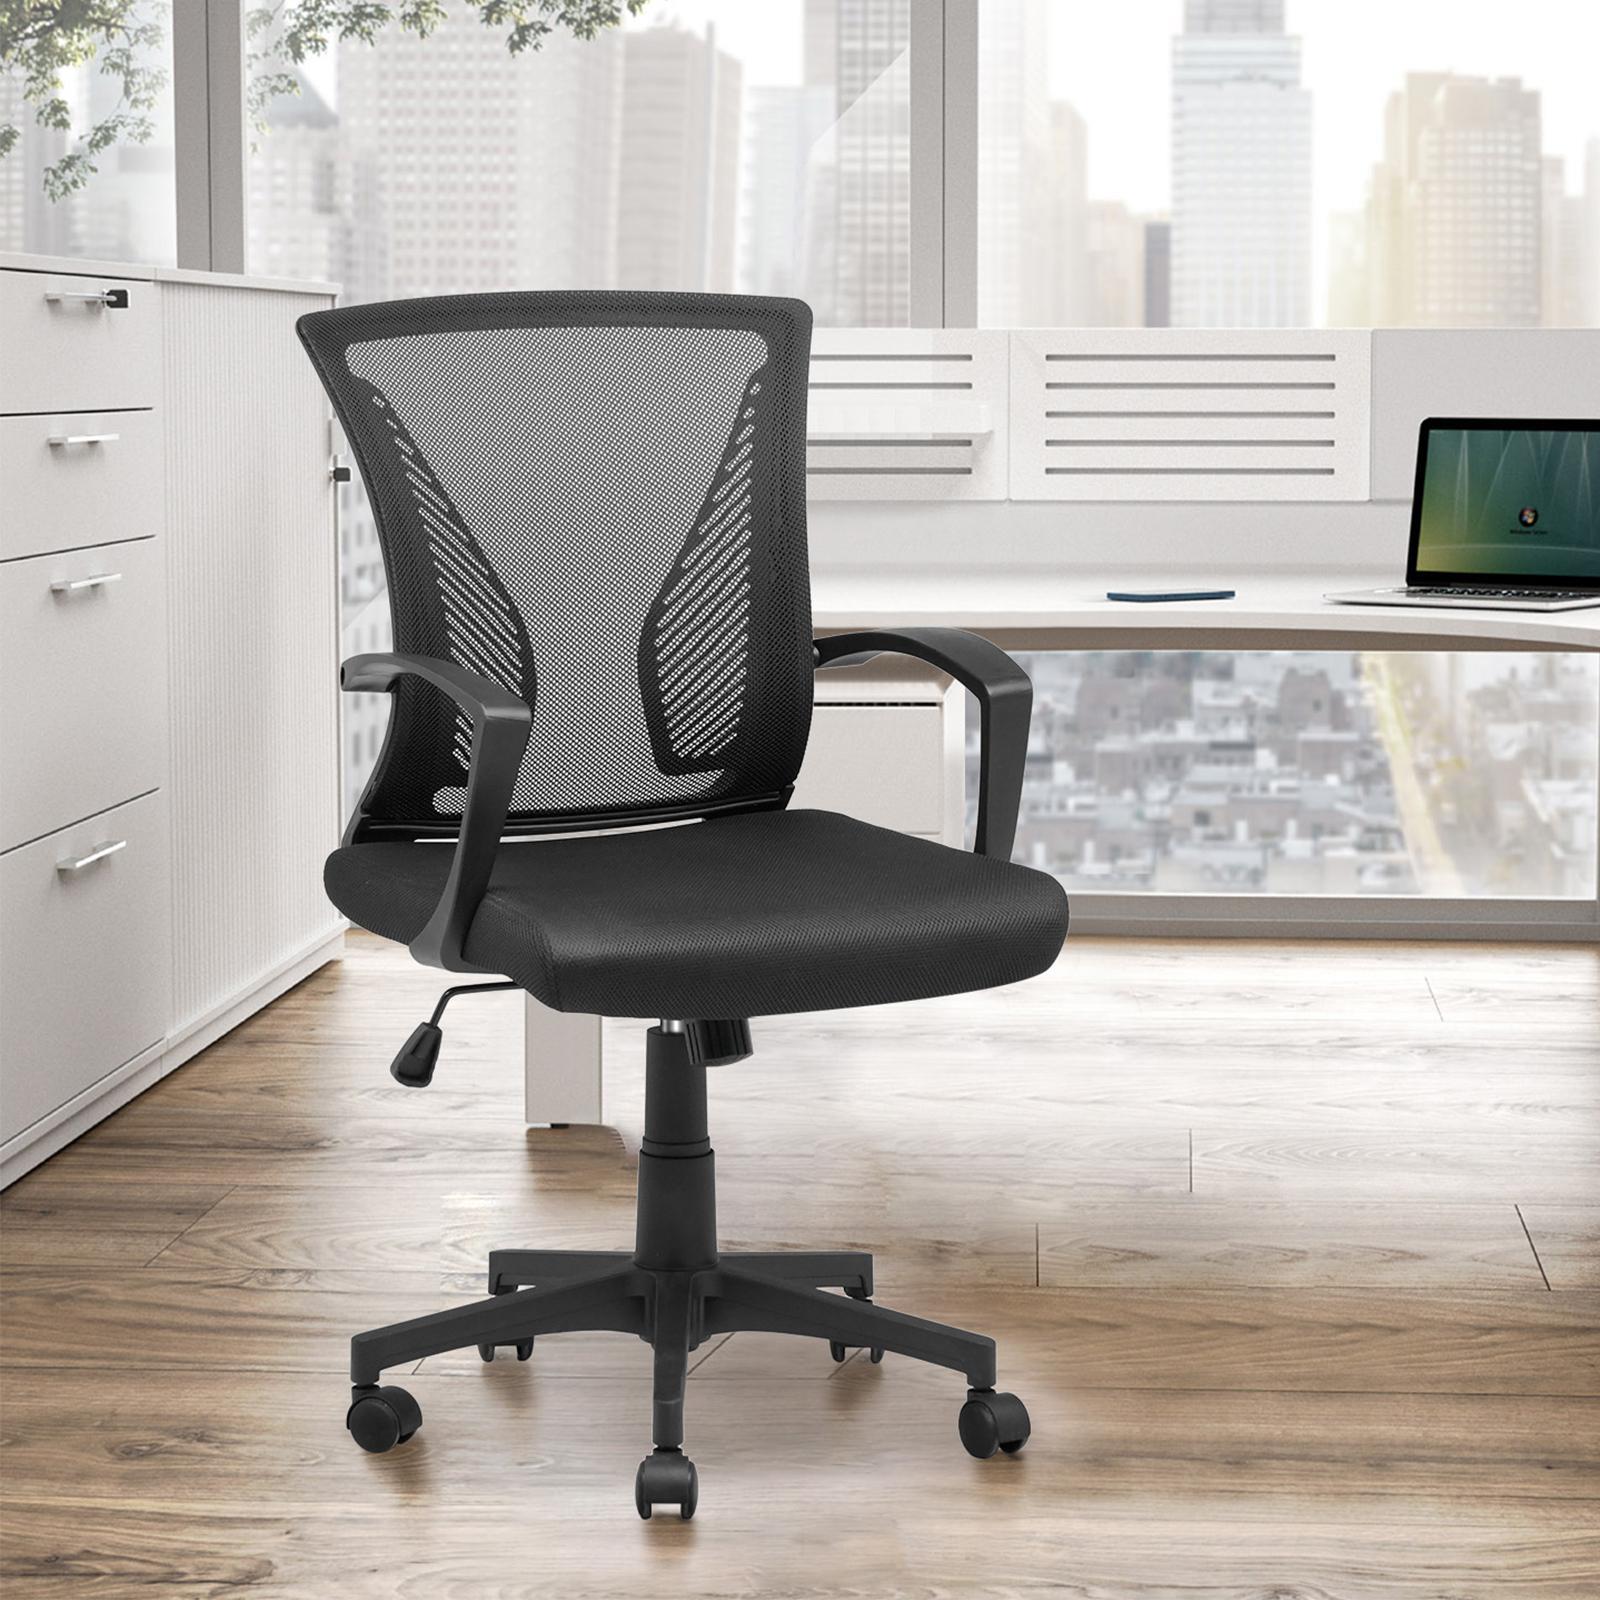 Advwin Office Chair Ergonomic Mesh Swivel Desk Chair Black